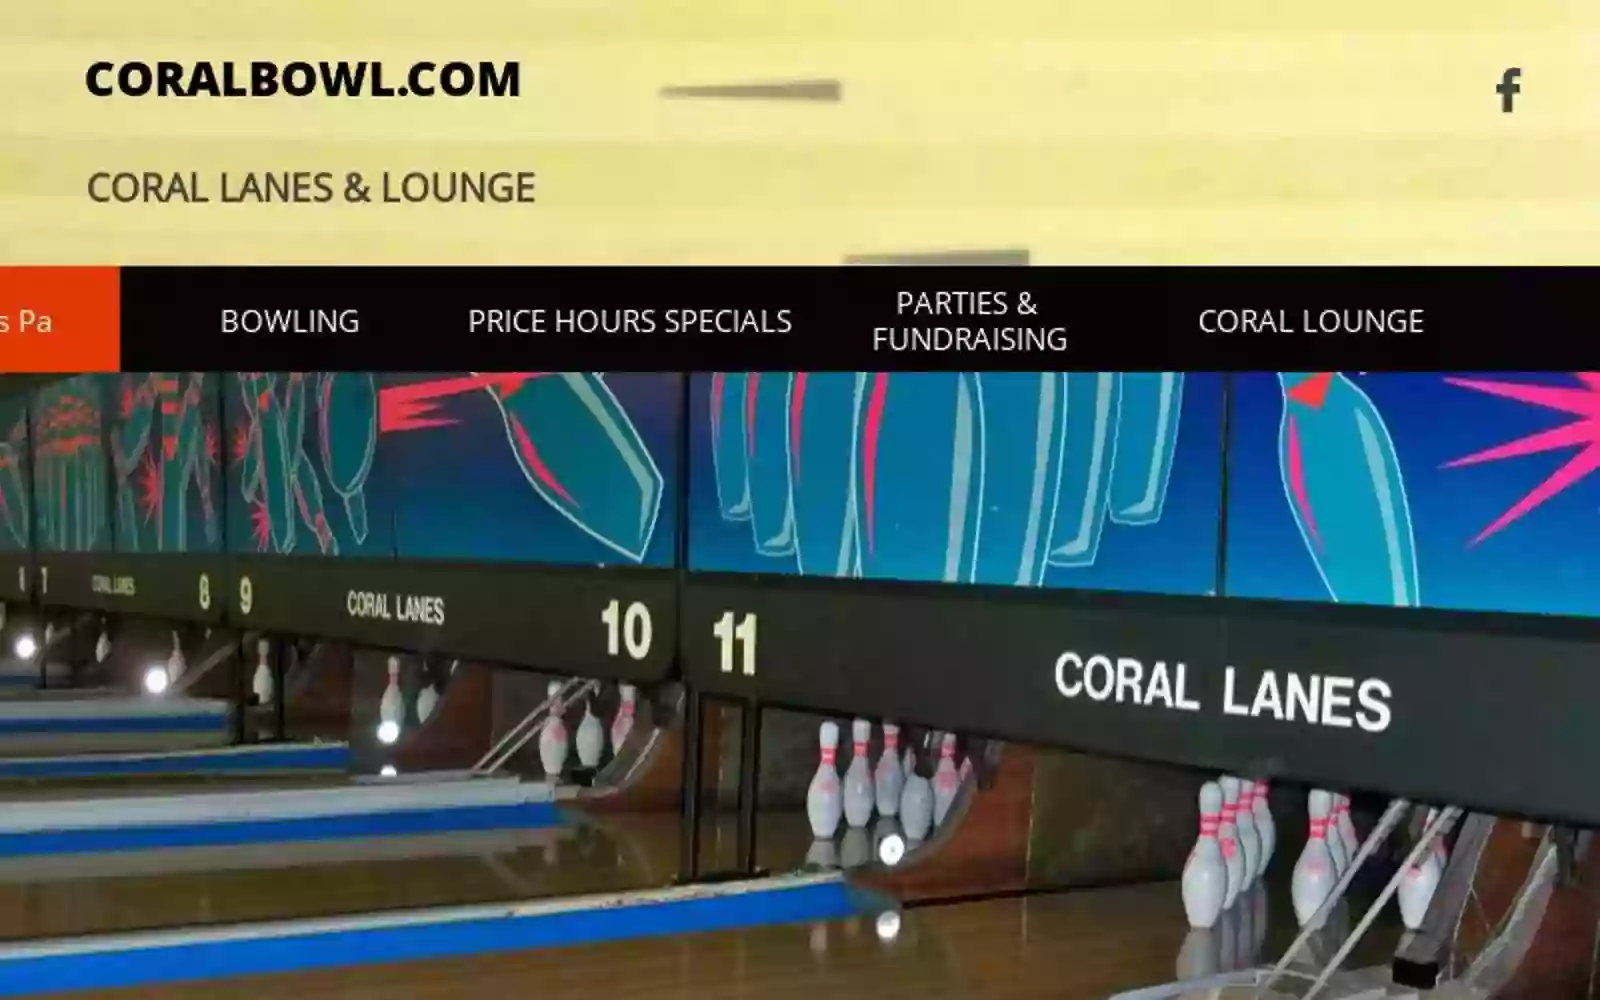 Coral Lanes & Lounge